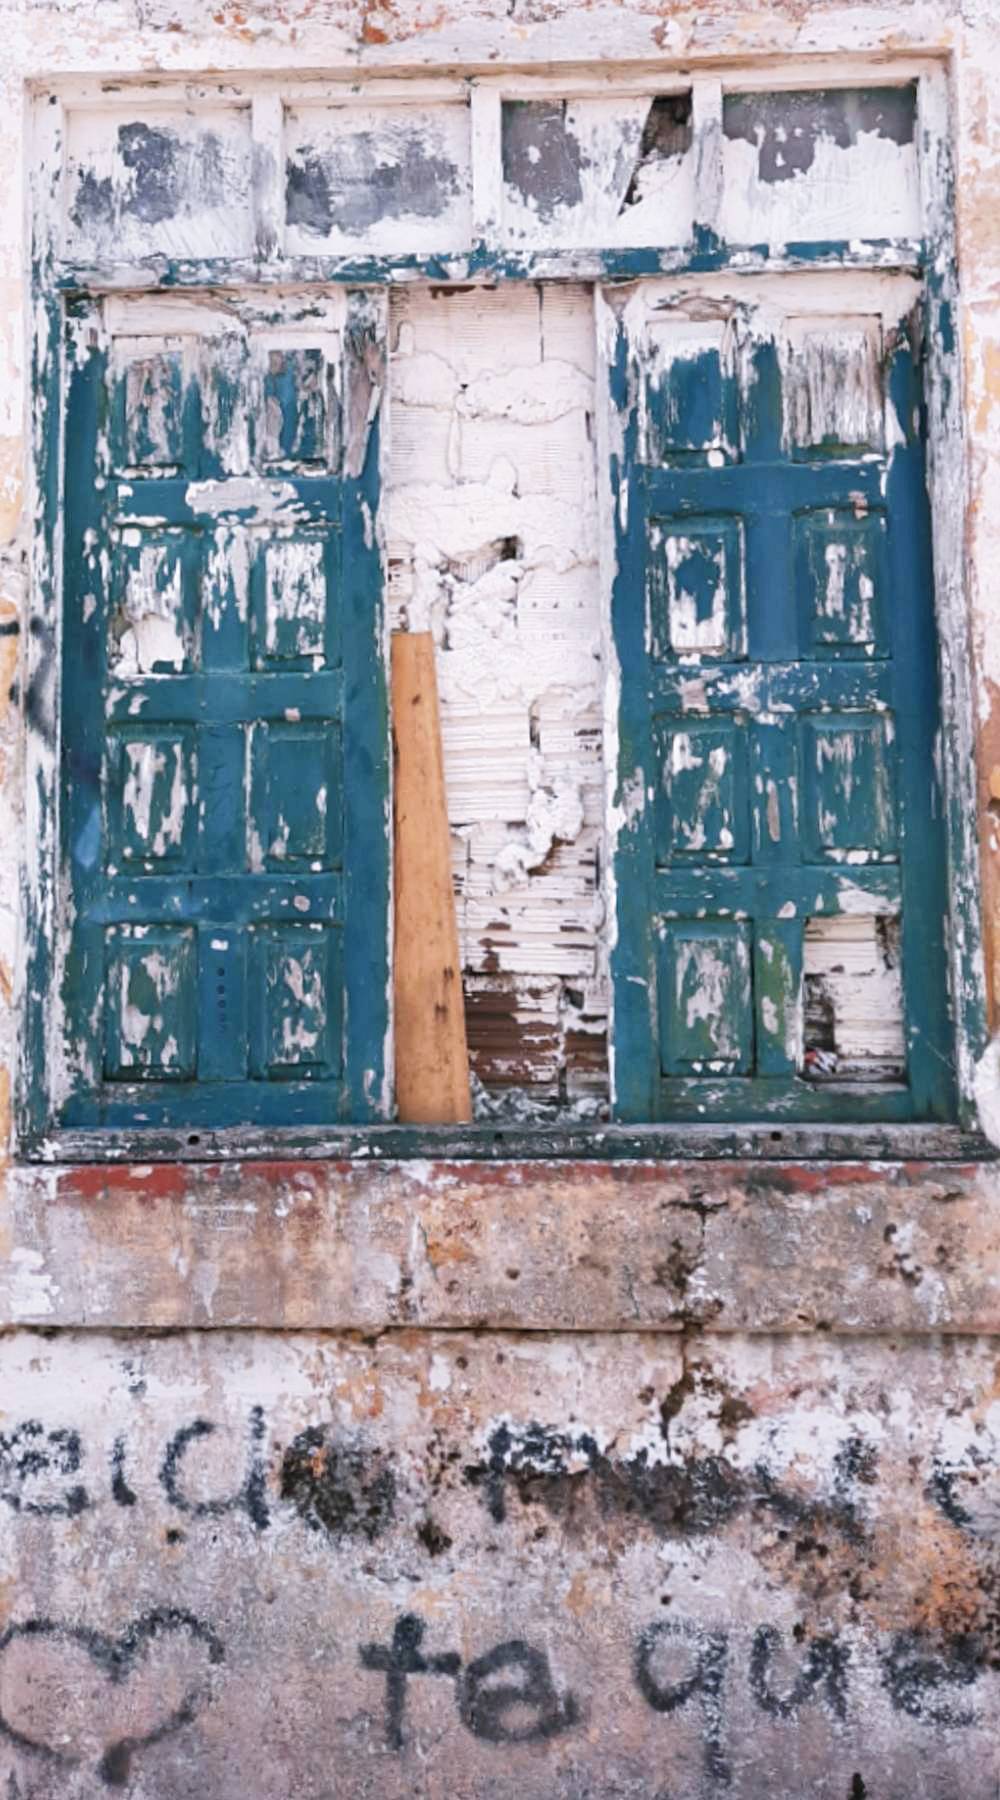 literatura paraibana clovis roberto janelas emparedadas abandono urbano centro historico joao pessoa